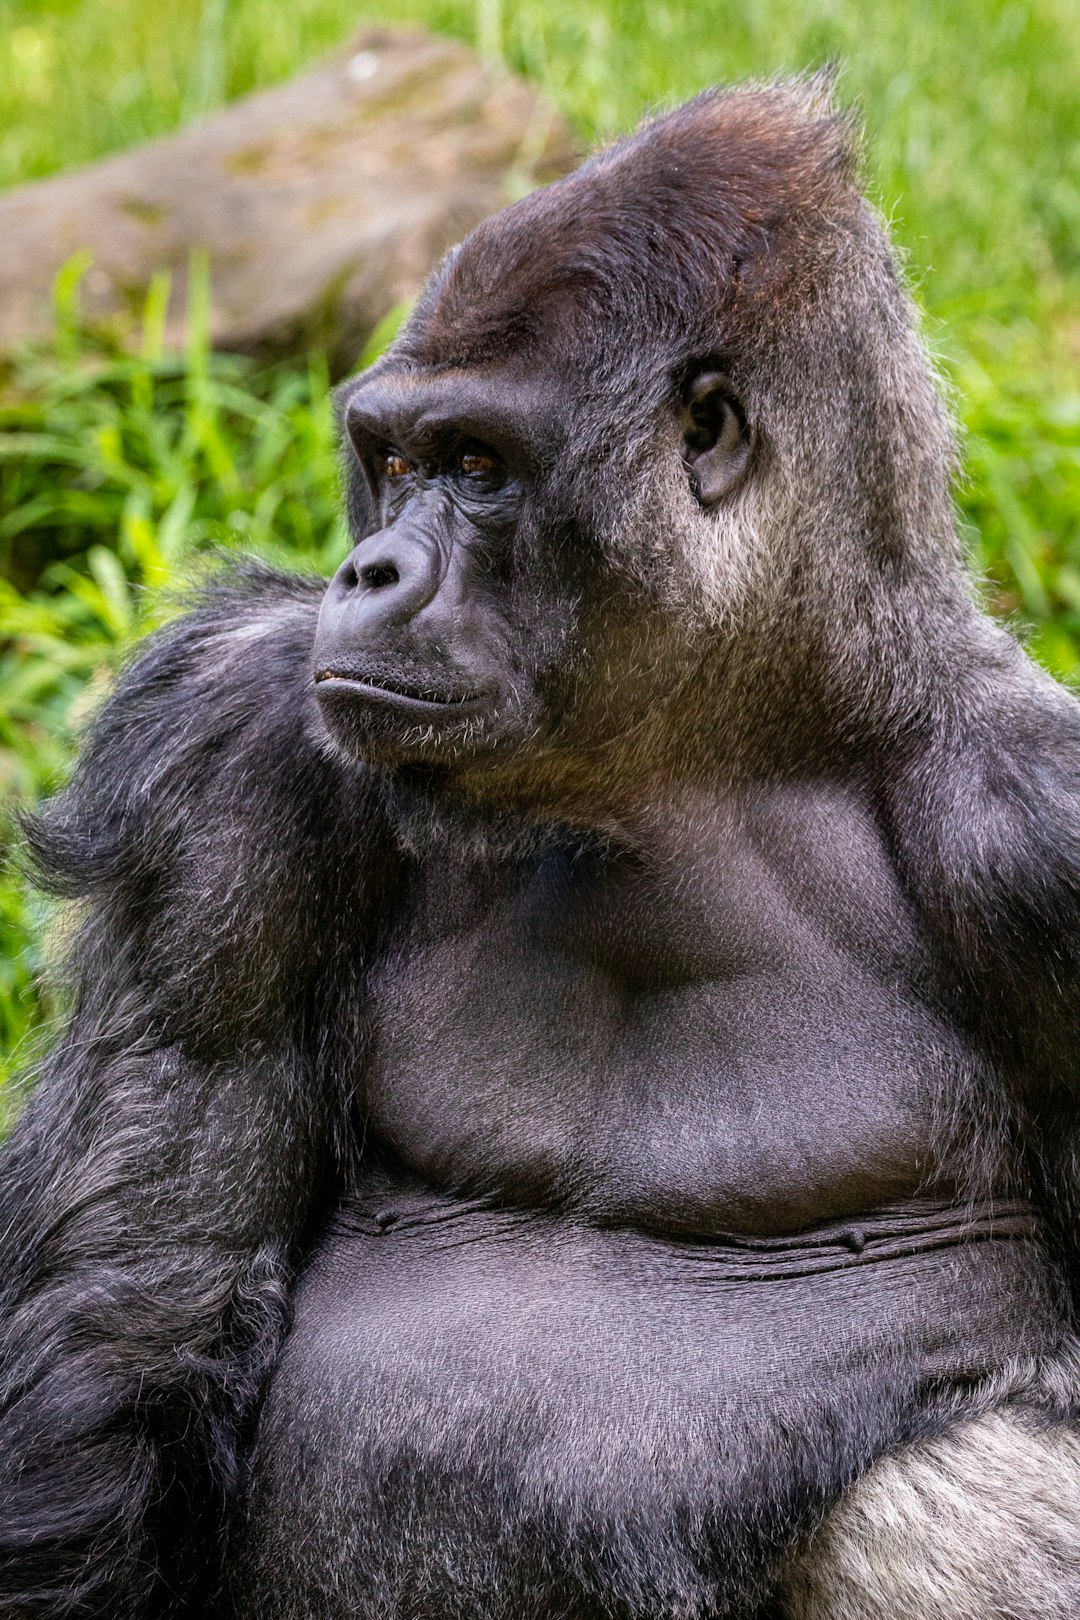 Portrait of a silverback gorilla at the Memphis Zoo.